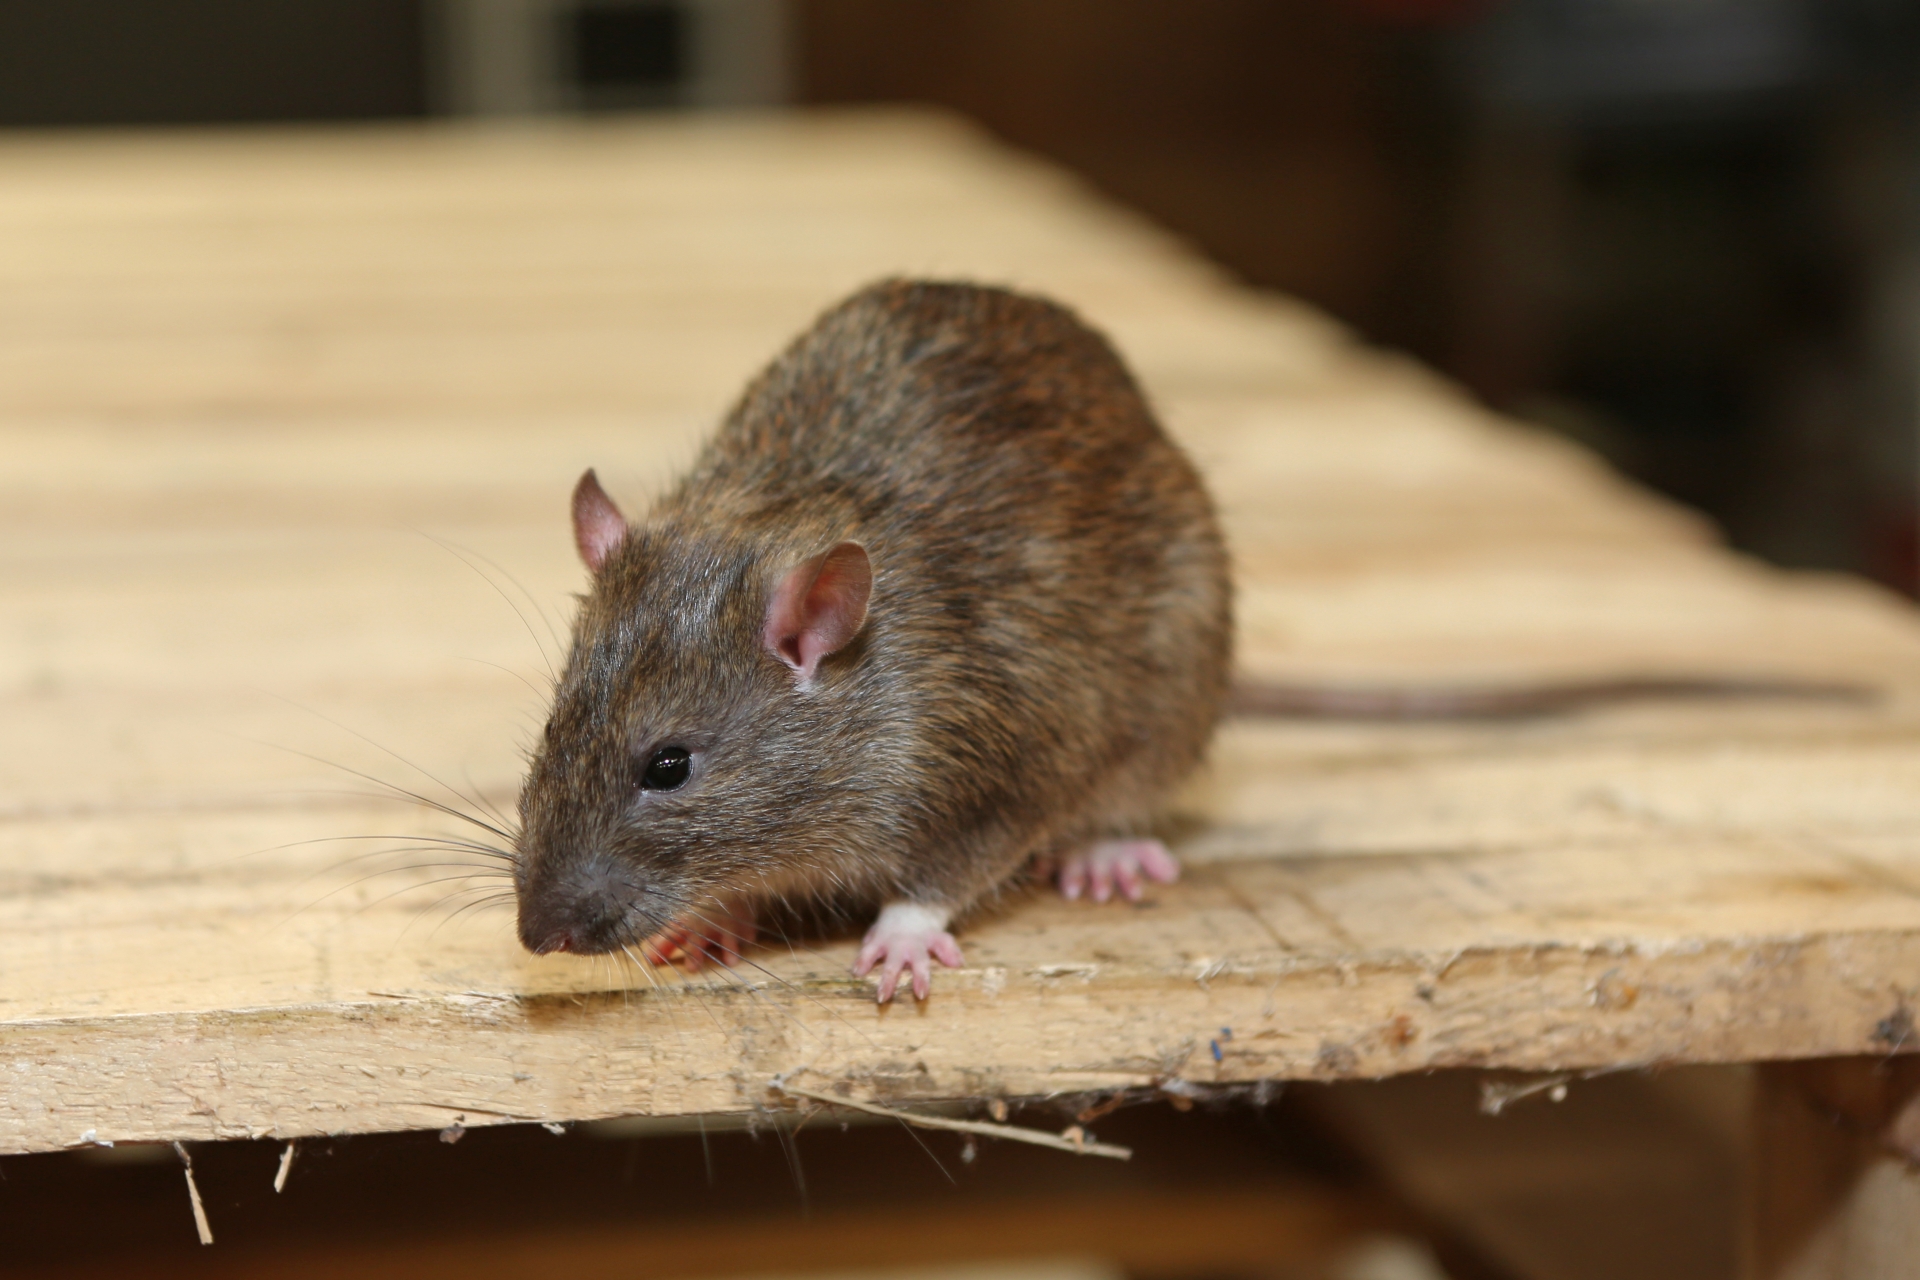 Rat extermination, Pest Control in Hounslow West, Hounslow Heath, Cranford, TW4. Call Now 020 8166 9746